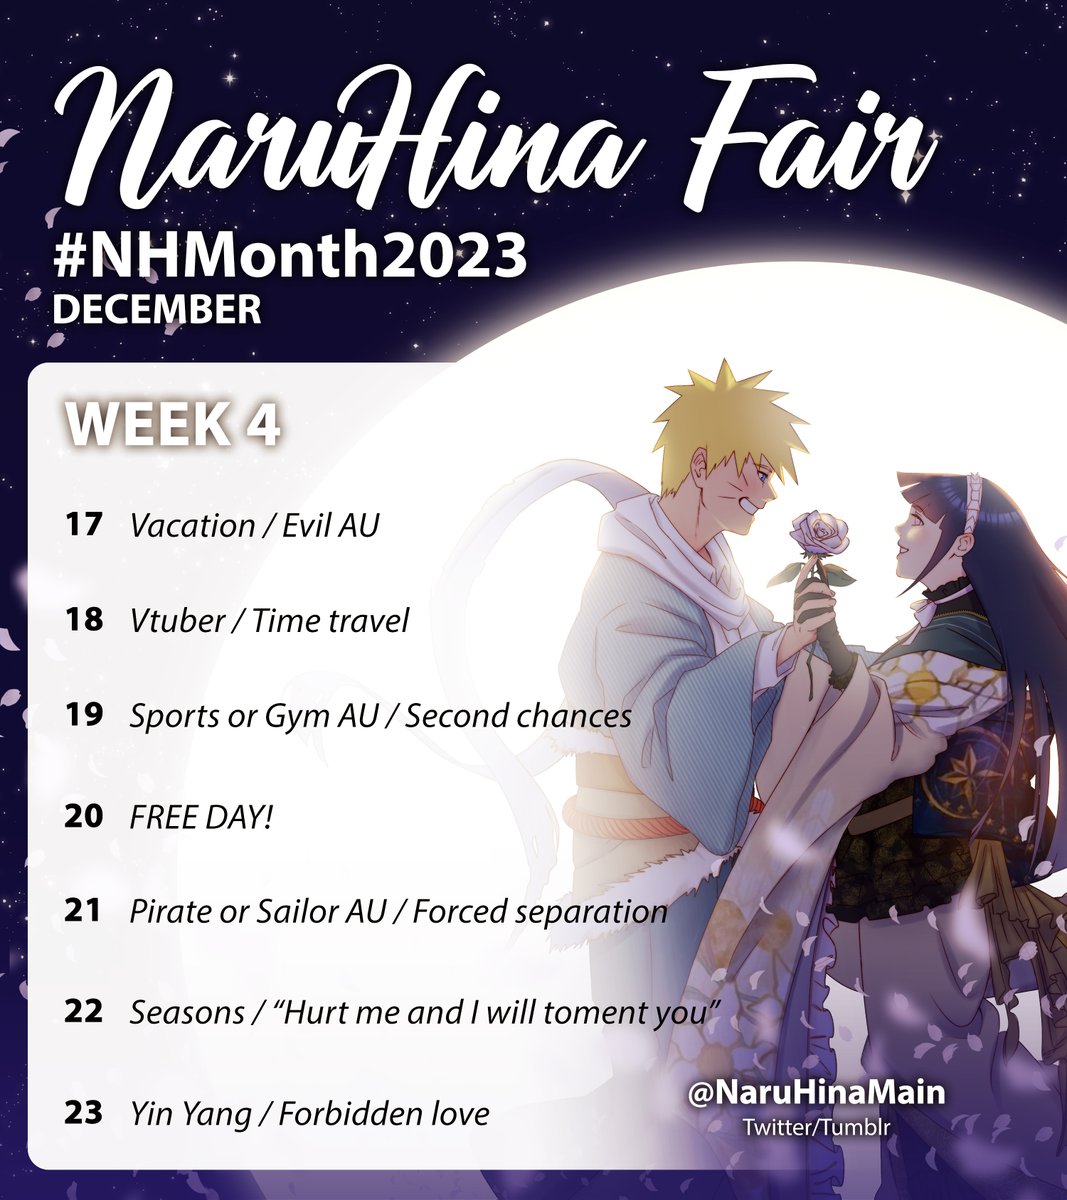 NaruHina Brasil - Bom dia! ⚡ O twitter oficial do anime